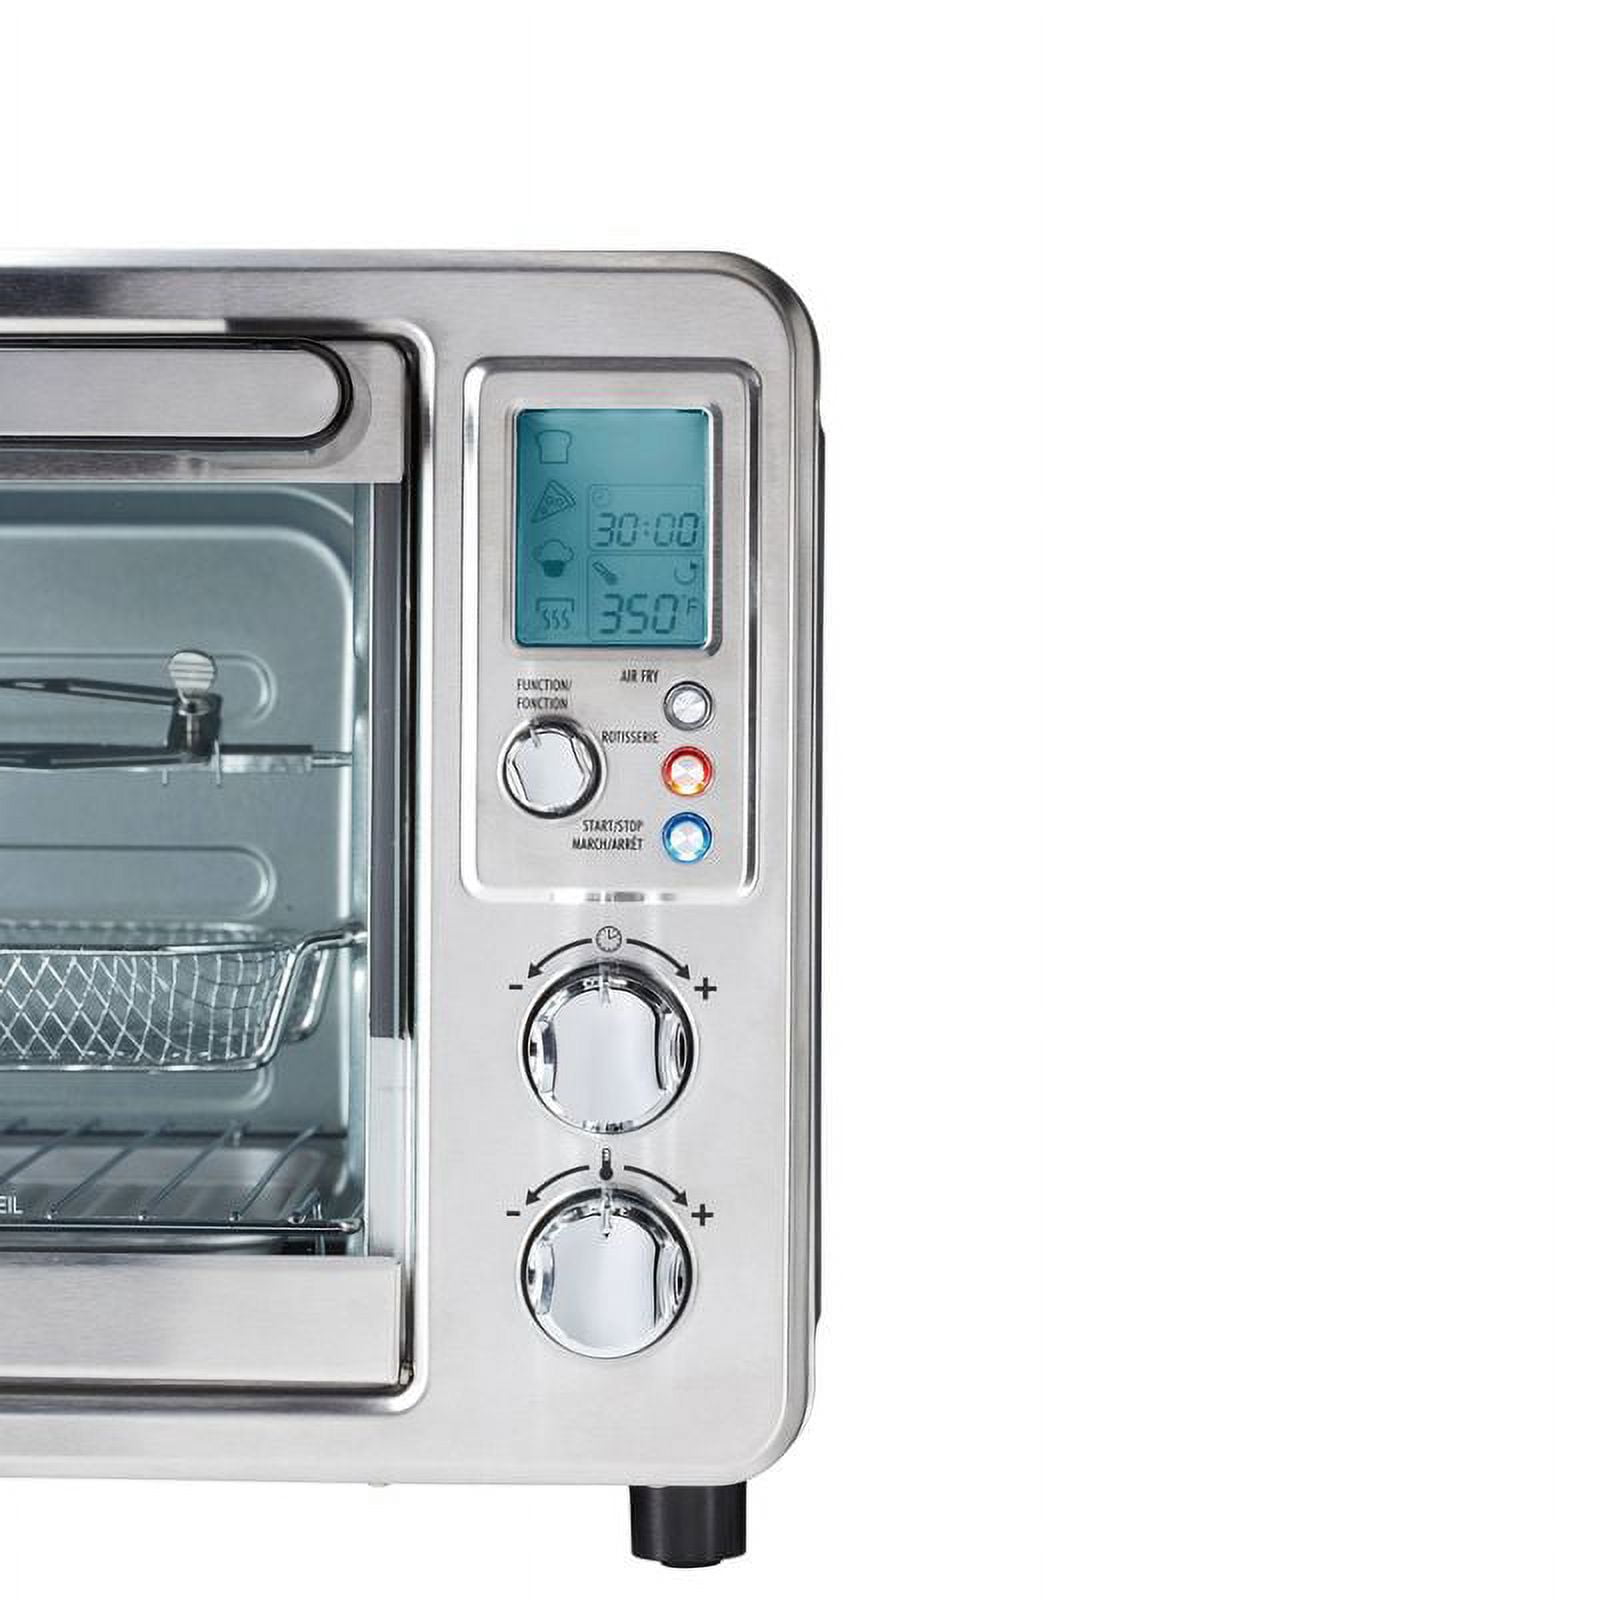 Hamilton Beach 1.12 Cu Ft Sure-Crisp XL Digital Air Fryer Oven in Grey